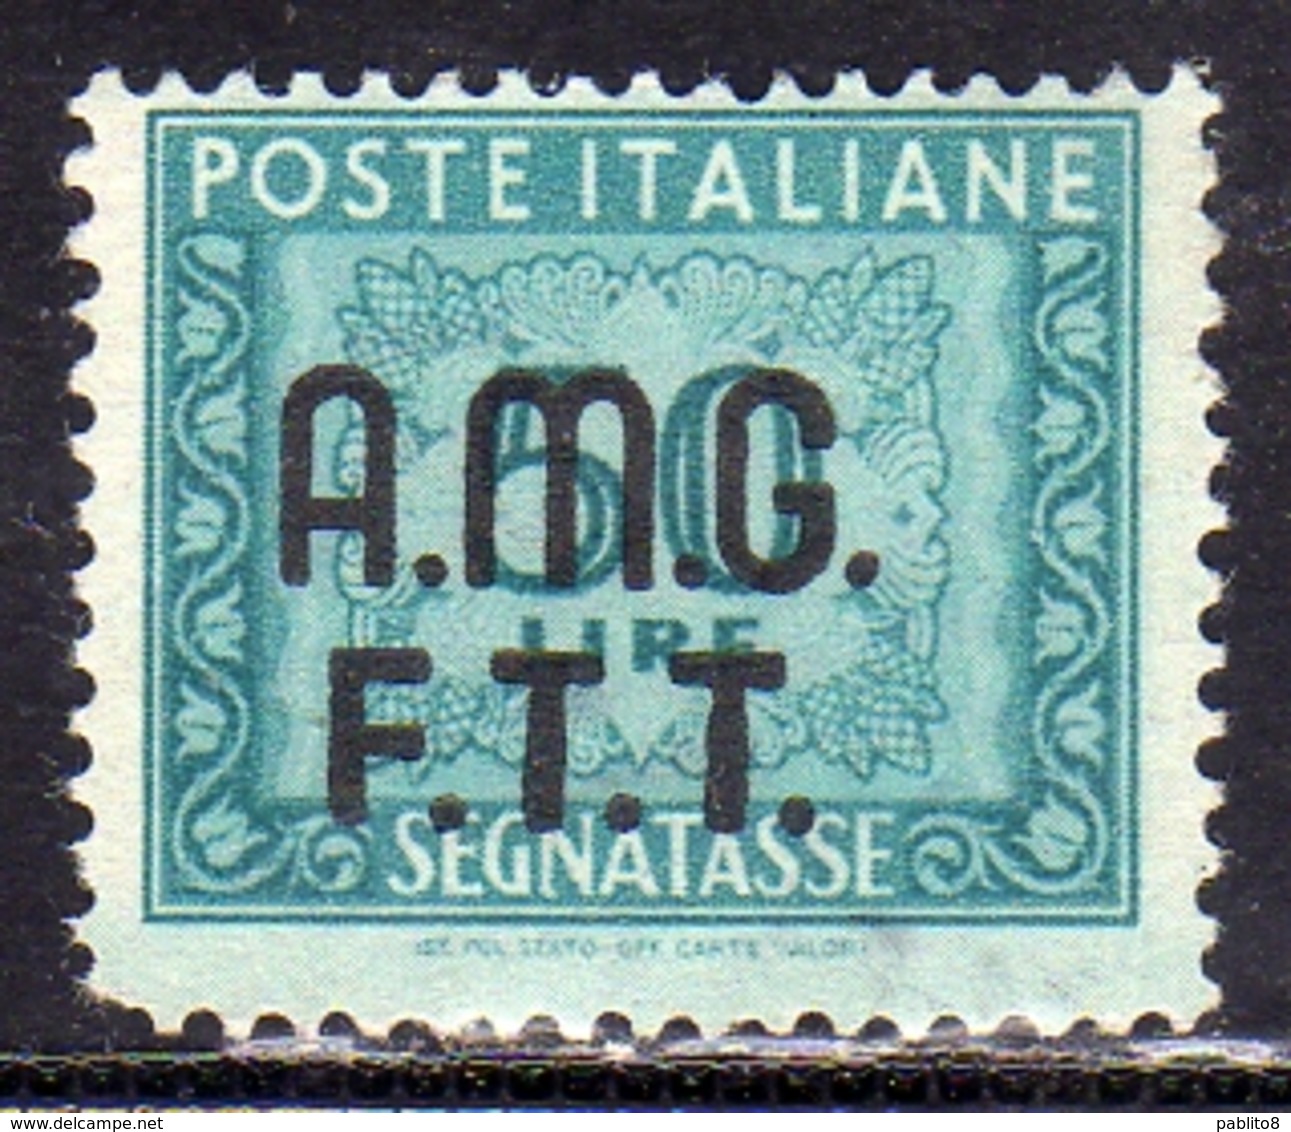 TRIESTE A 1947 1949 AMG-FTT SOPRASTAMPATO D'ITALIA ITALY OVERPRINTED SEGNATASSE POSTAGE DUE TAXES TASSE LIRE 50 MNH - Taxe